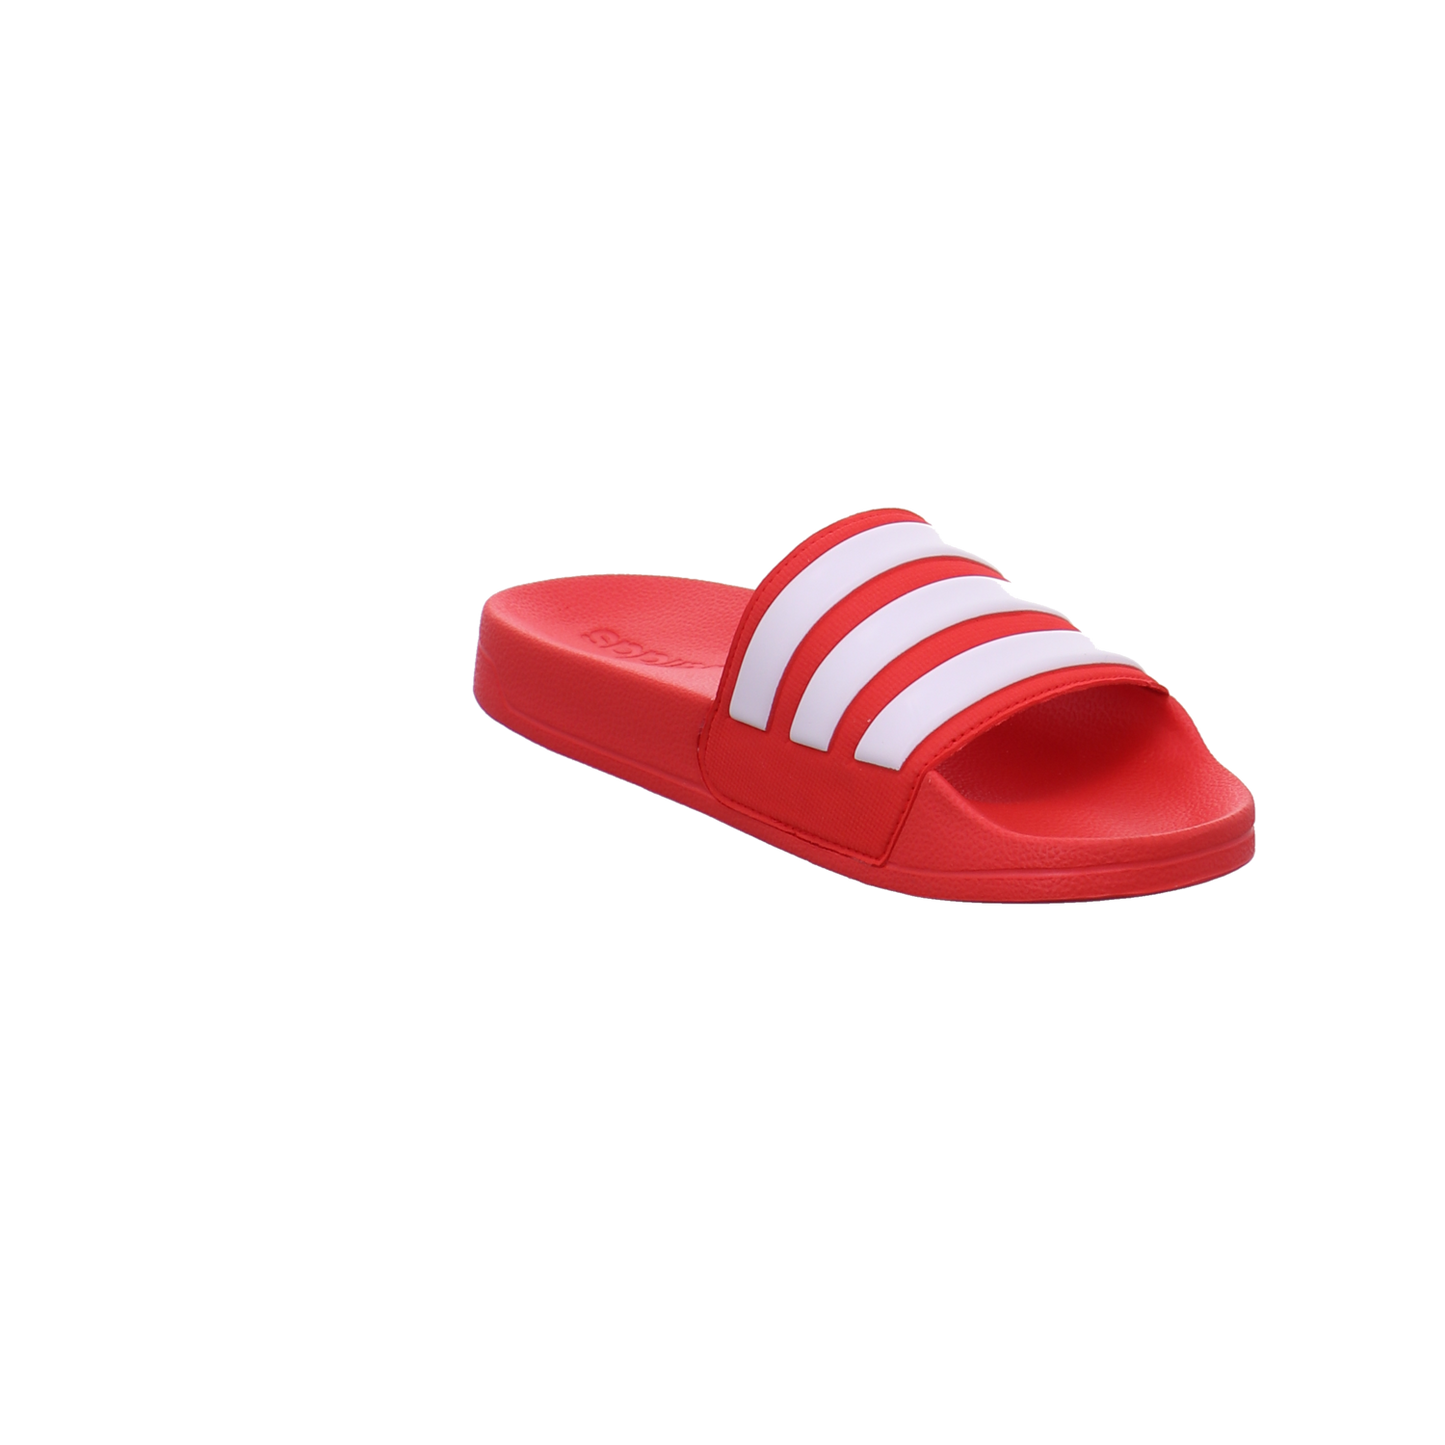 Adidas Schuhe  rot Bild7